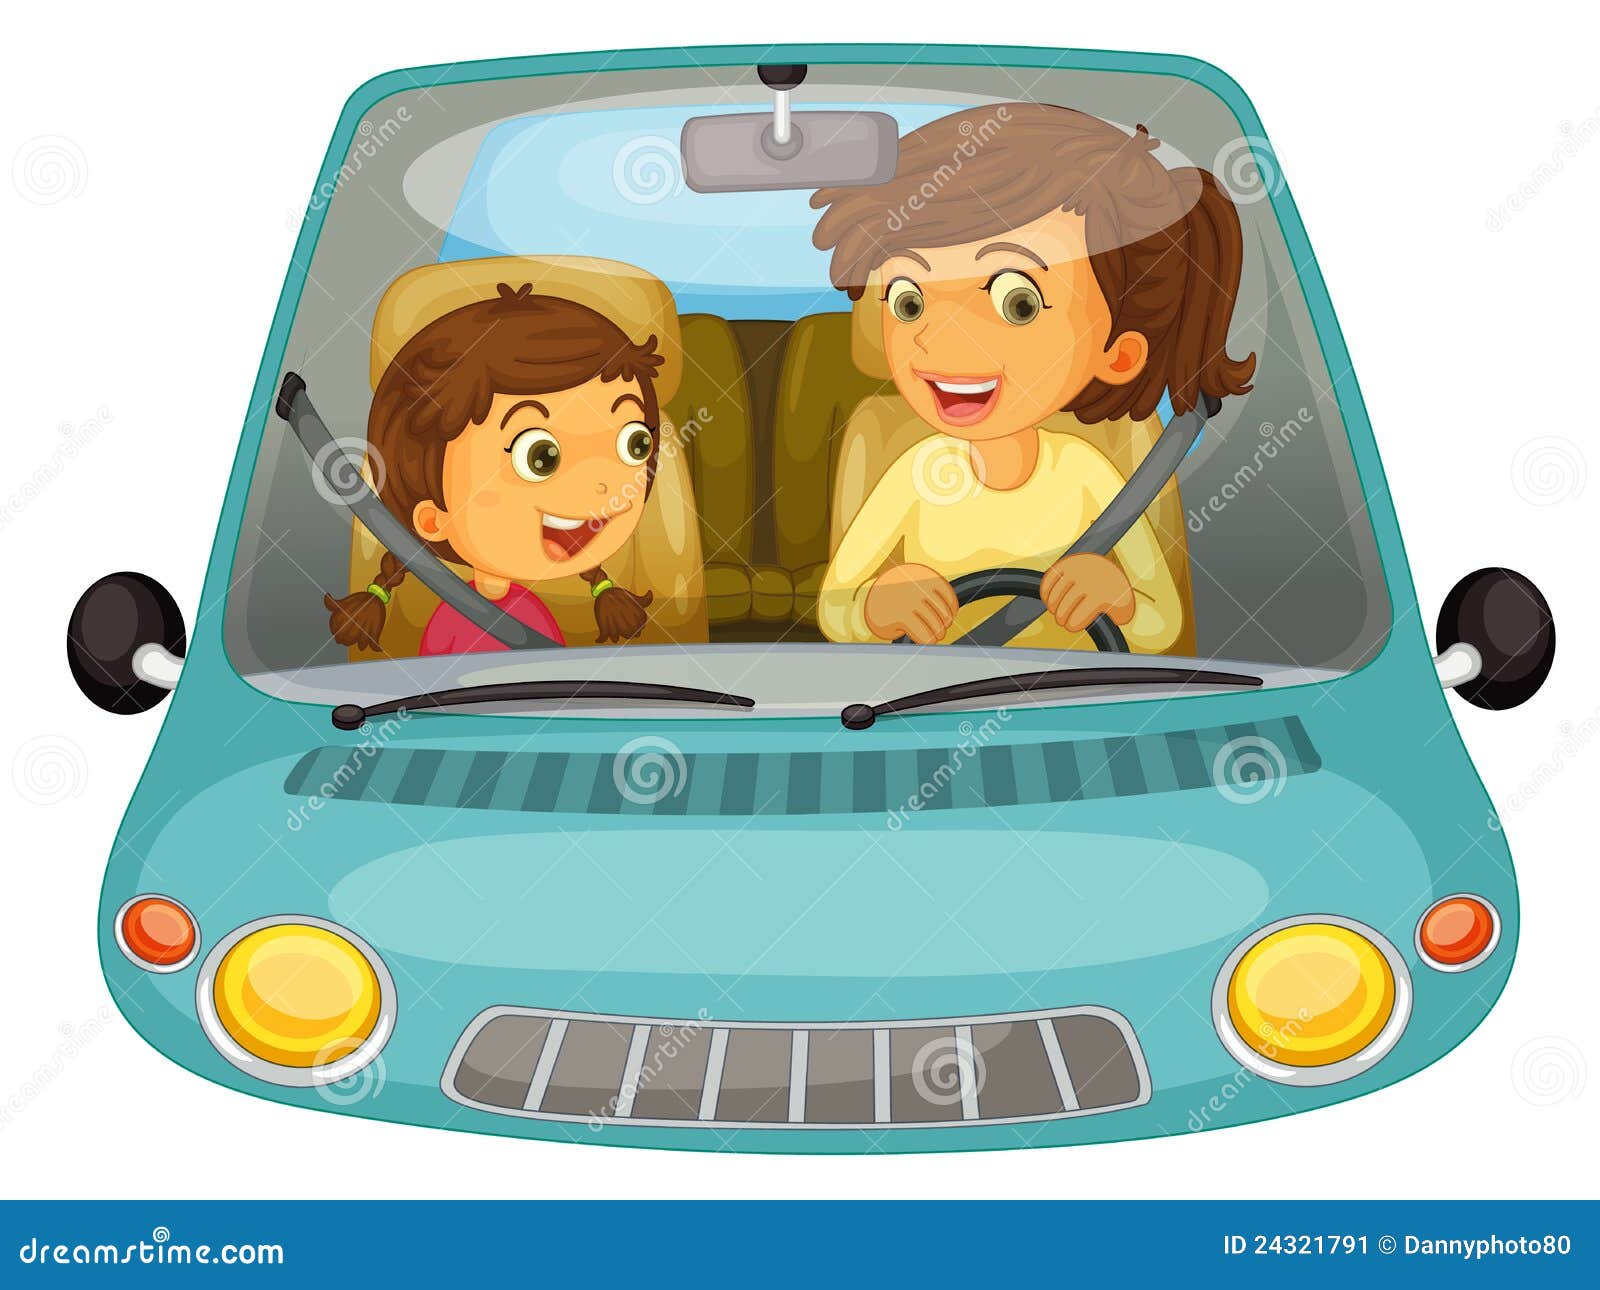 My mums car. Семейное автопутешествие рисунок. She is Driving a car рисунок для детей. Driver картинка детская. Driving Kids.